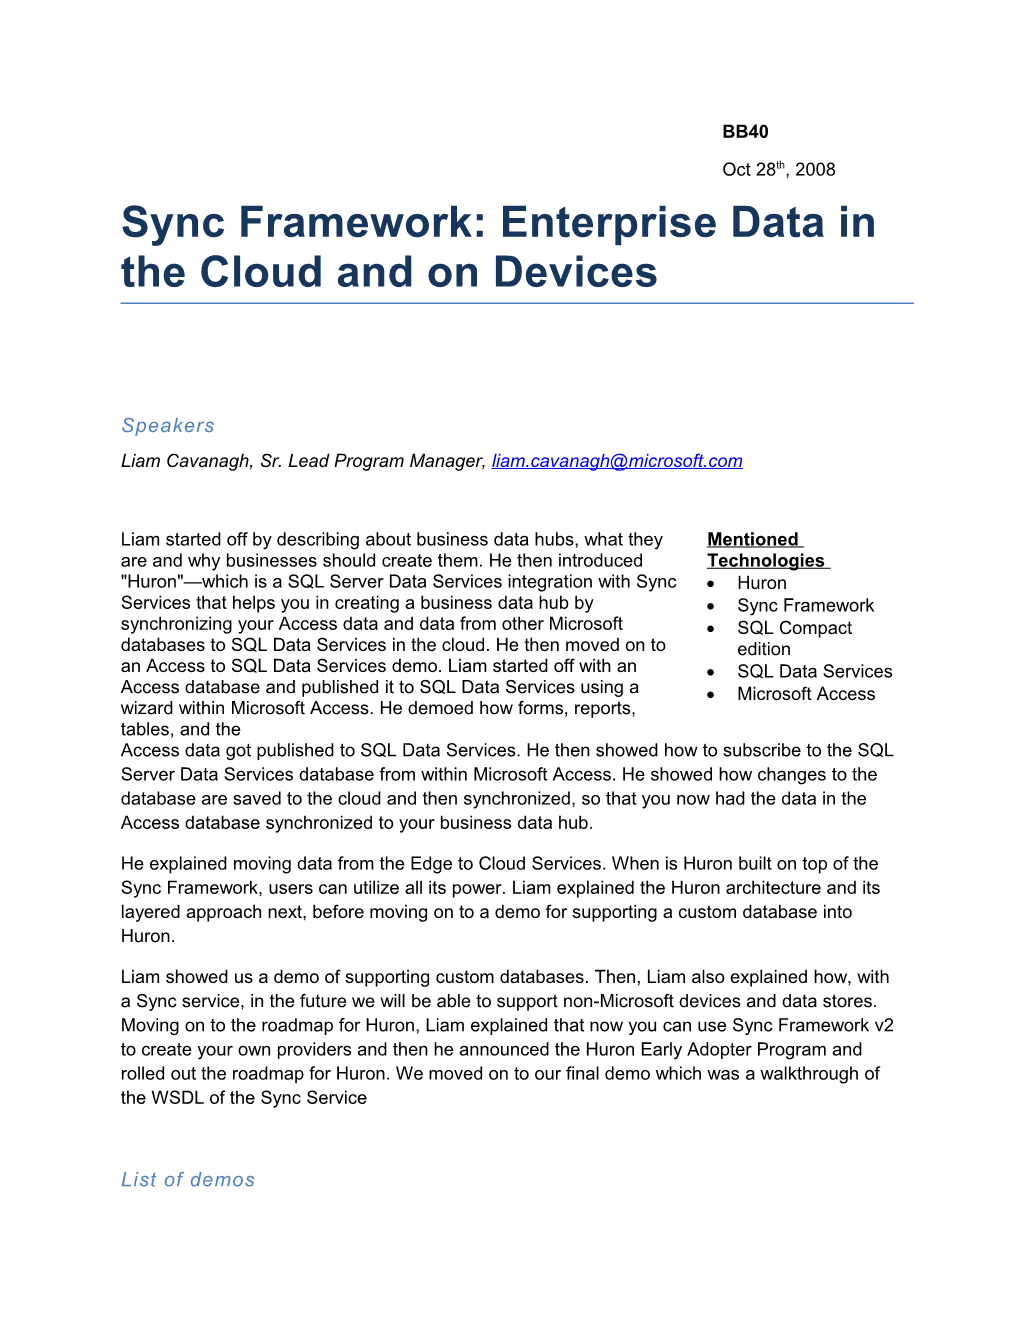 Sync Framework